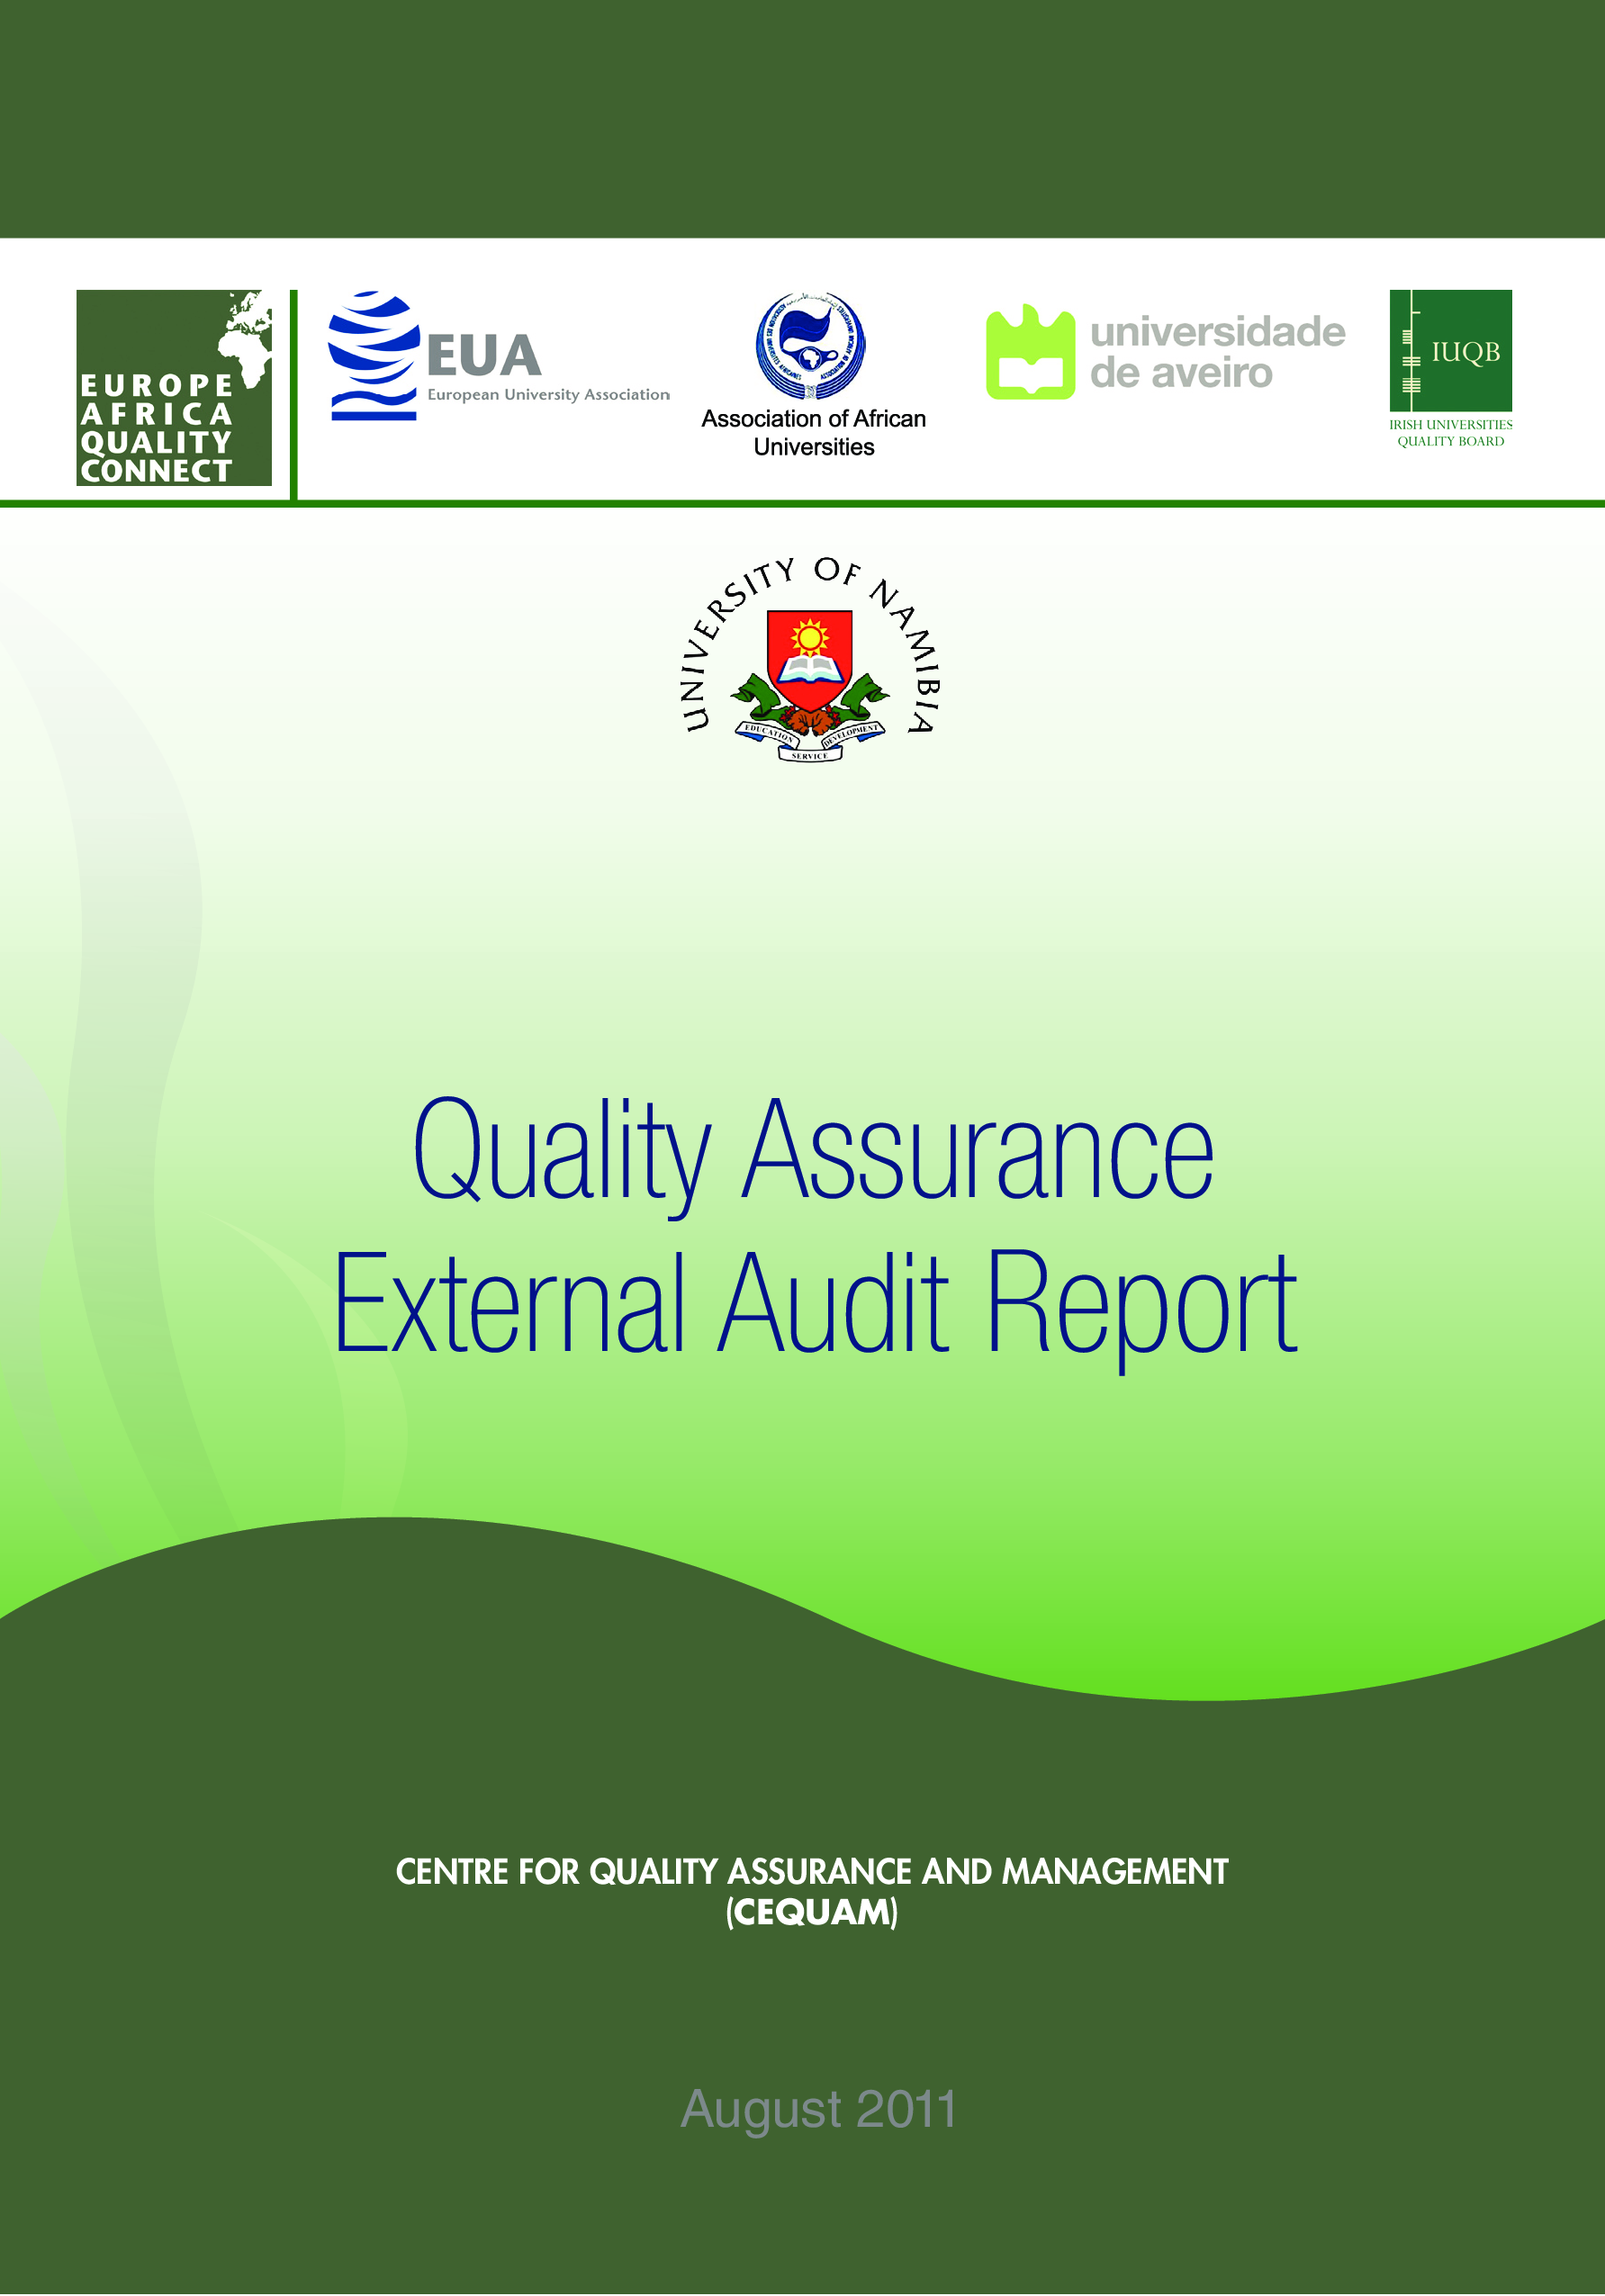 Quality Assurance Audit Report main image